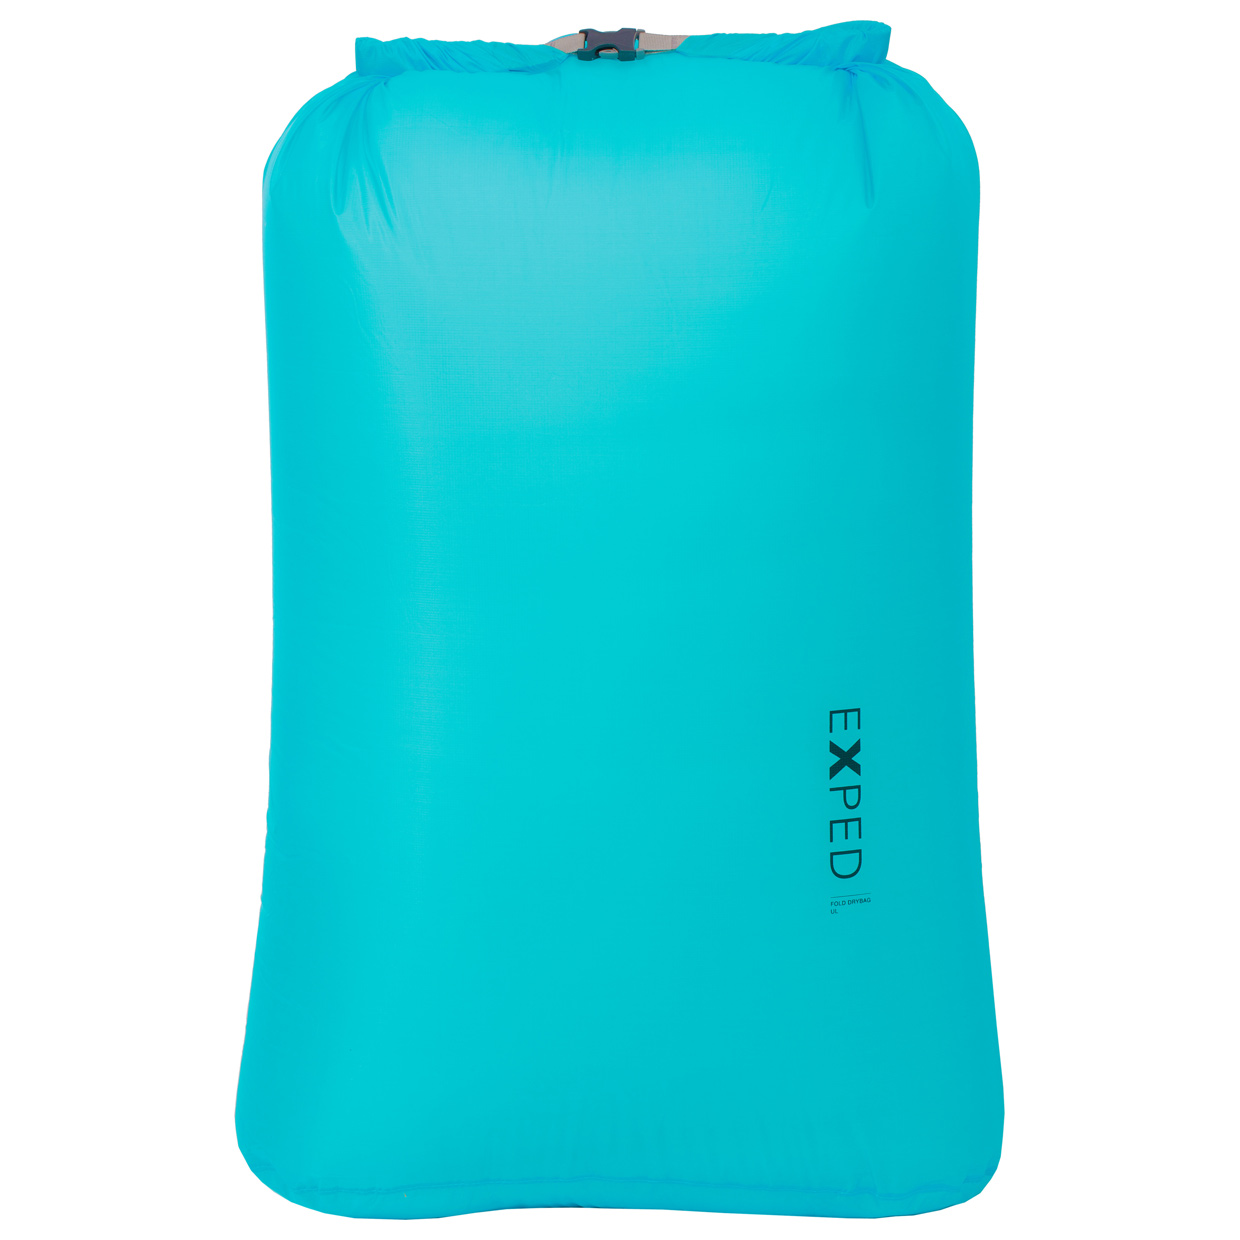 Packsack Fold Drybag UL